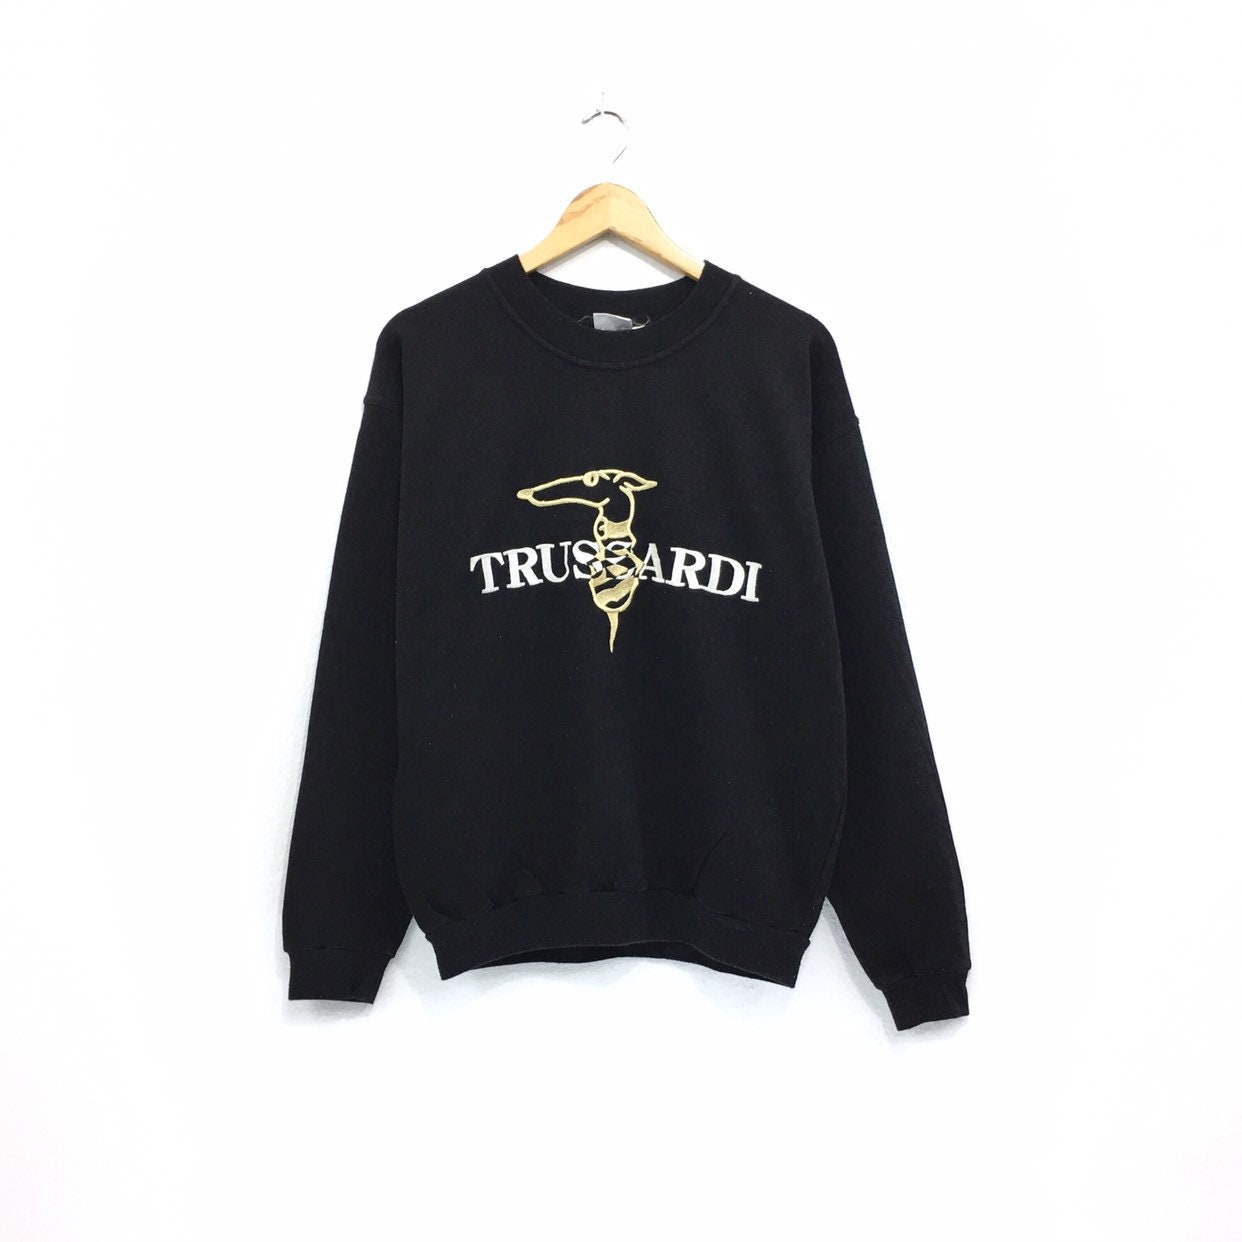 Vintage Trussardi Sweatshirt Made In Italy biglogo embroided | Etsy